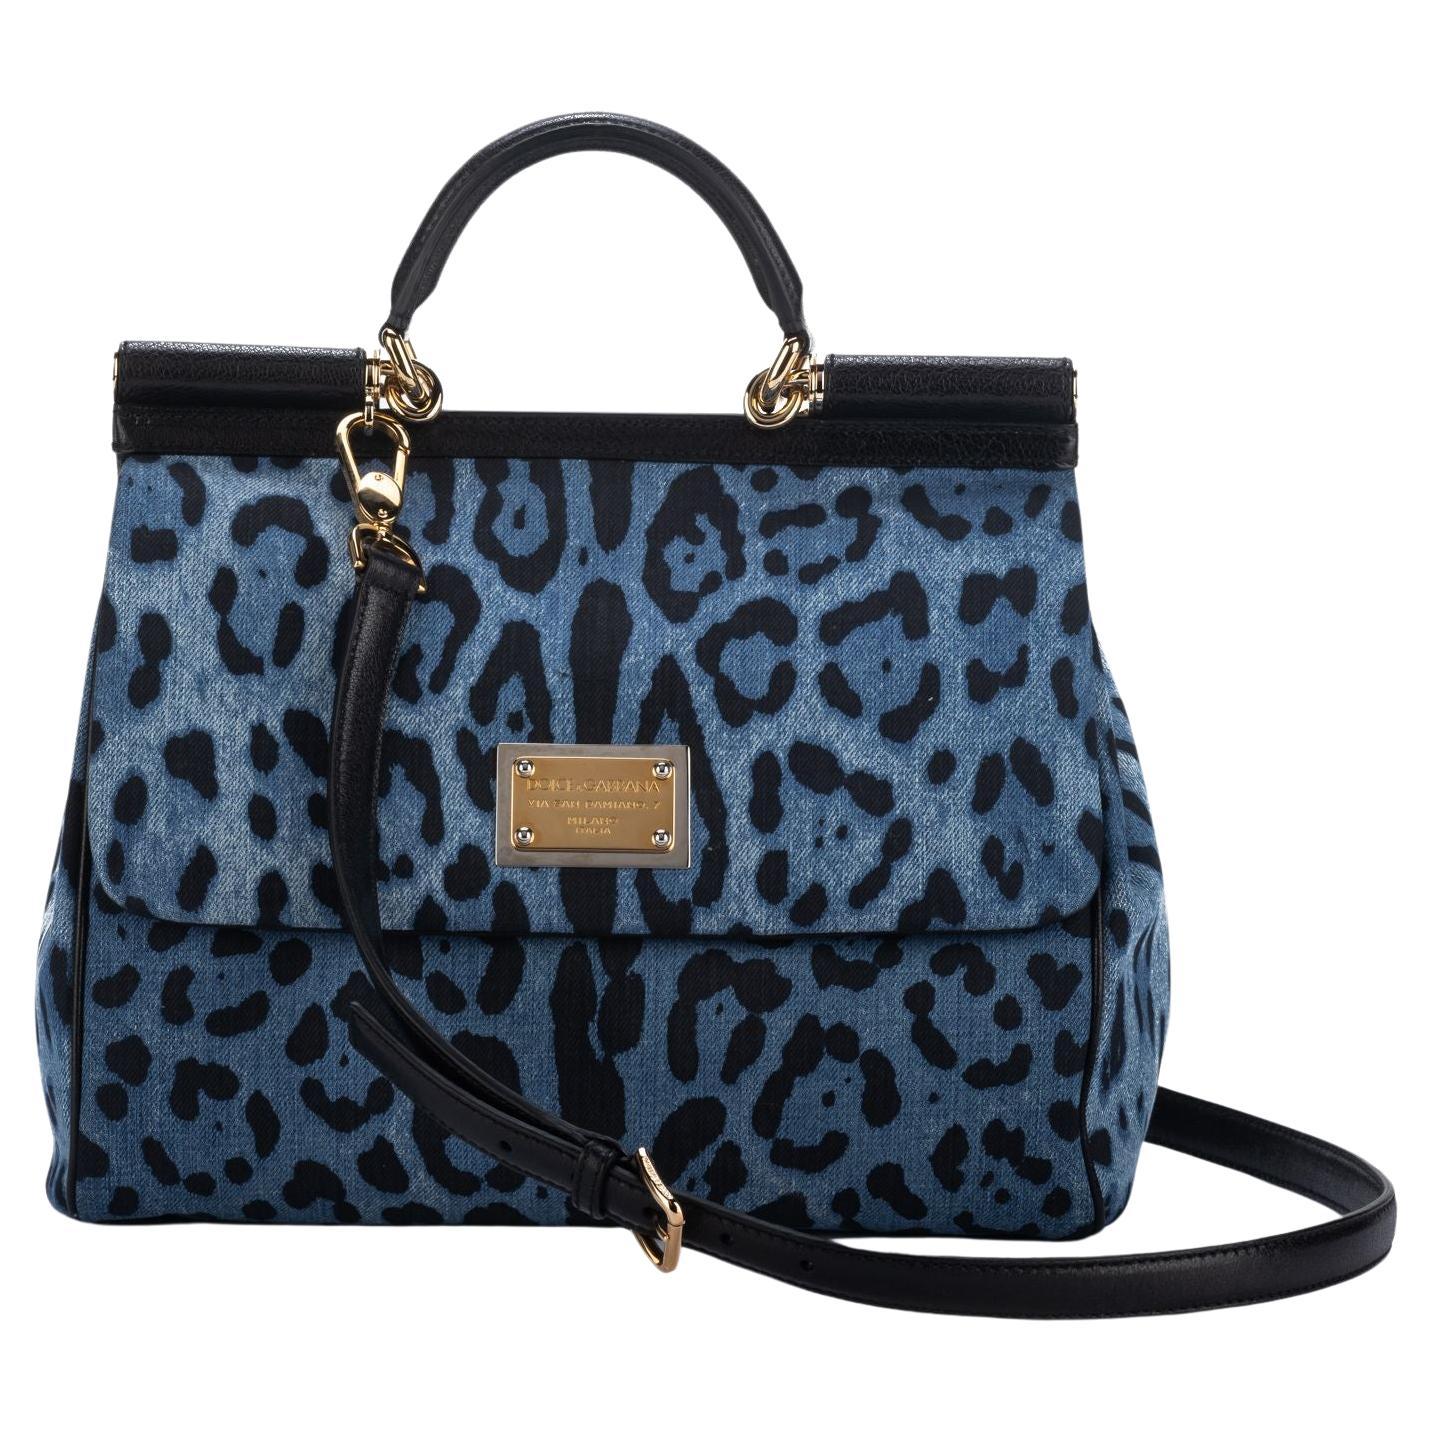 Dolce & Gabbana New Cheetah Denim LG Bag For Sale